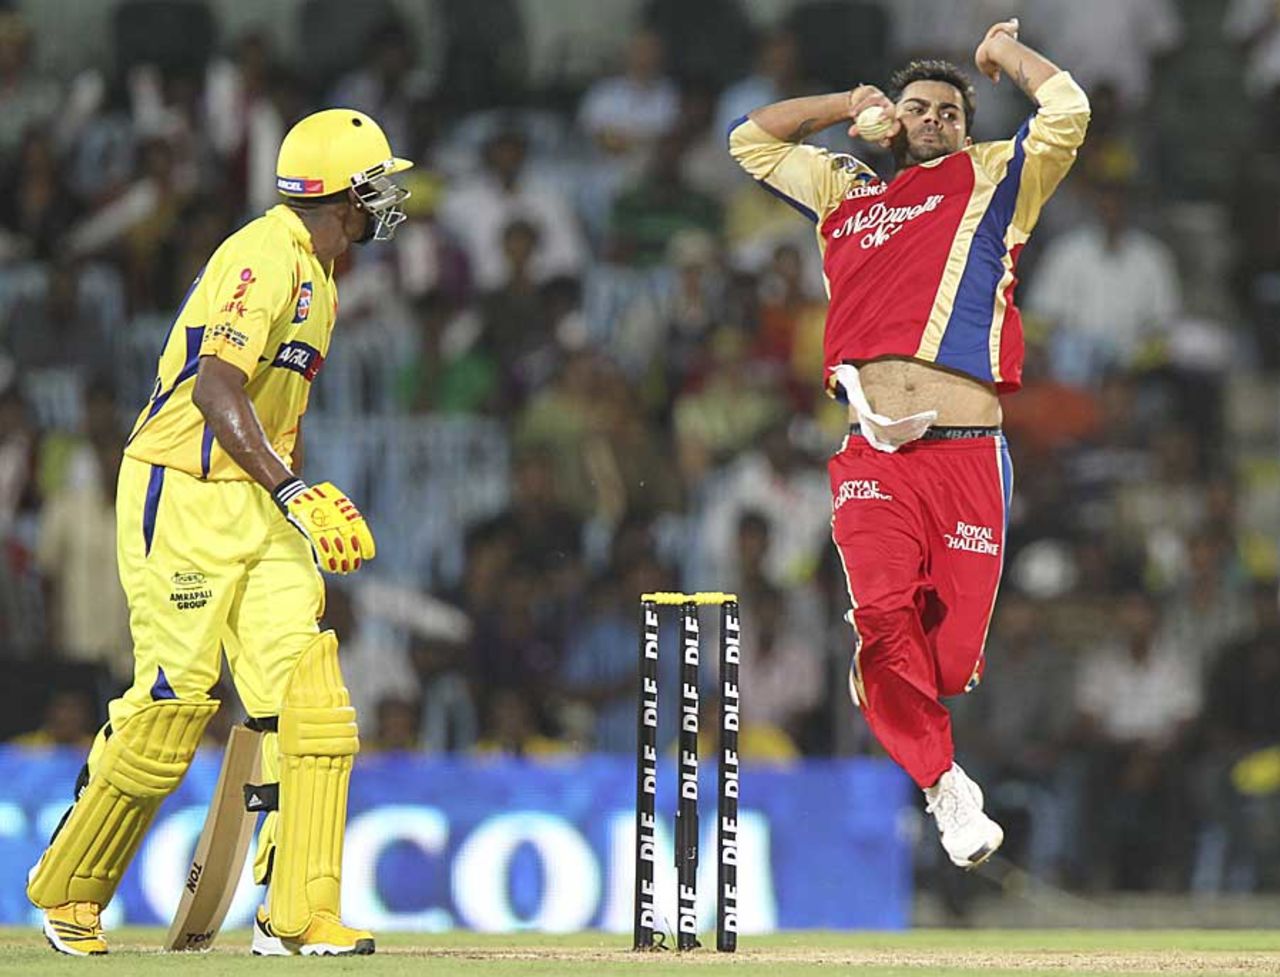 Virat Kohli conceded 28 in an over, Chennai Super Kings v Royal Challengers Bangalore, IPL, Chennai, April 12, 2012